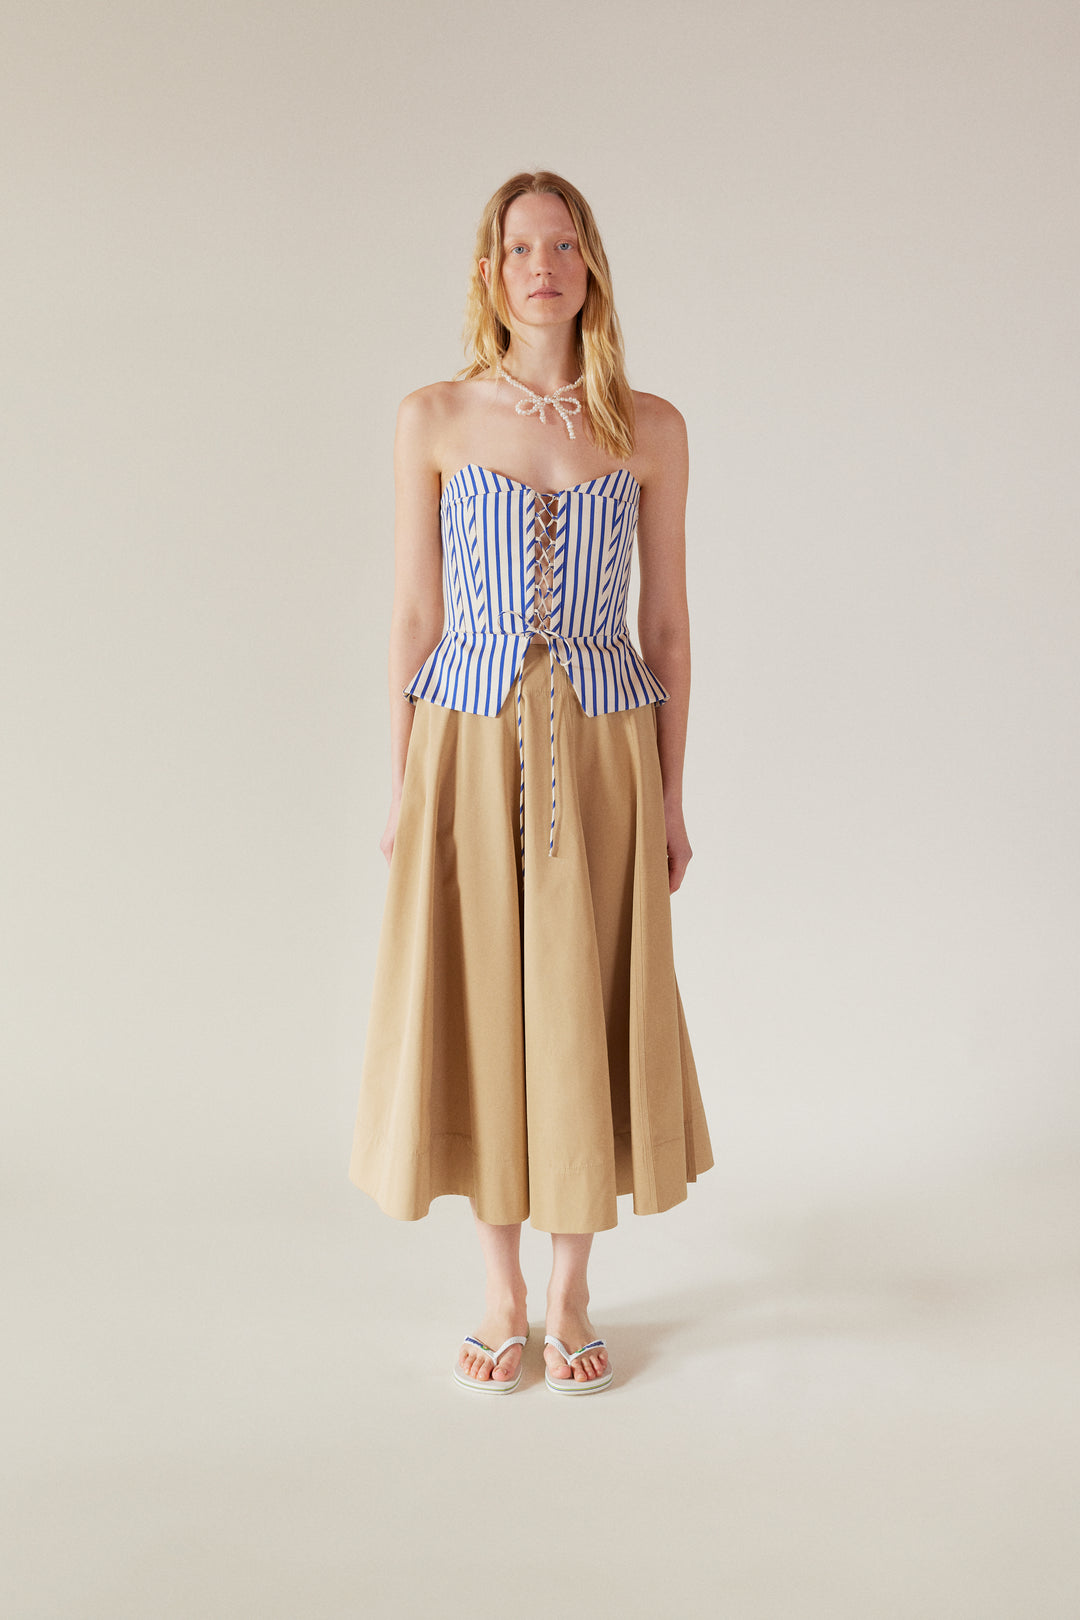 SICILY - Pleated Cotton-Poplin Midi Skirt Dark Beige